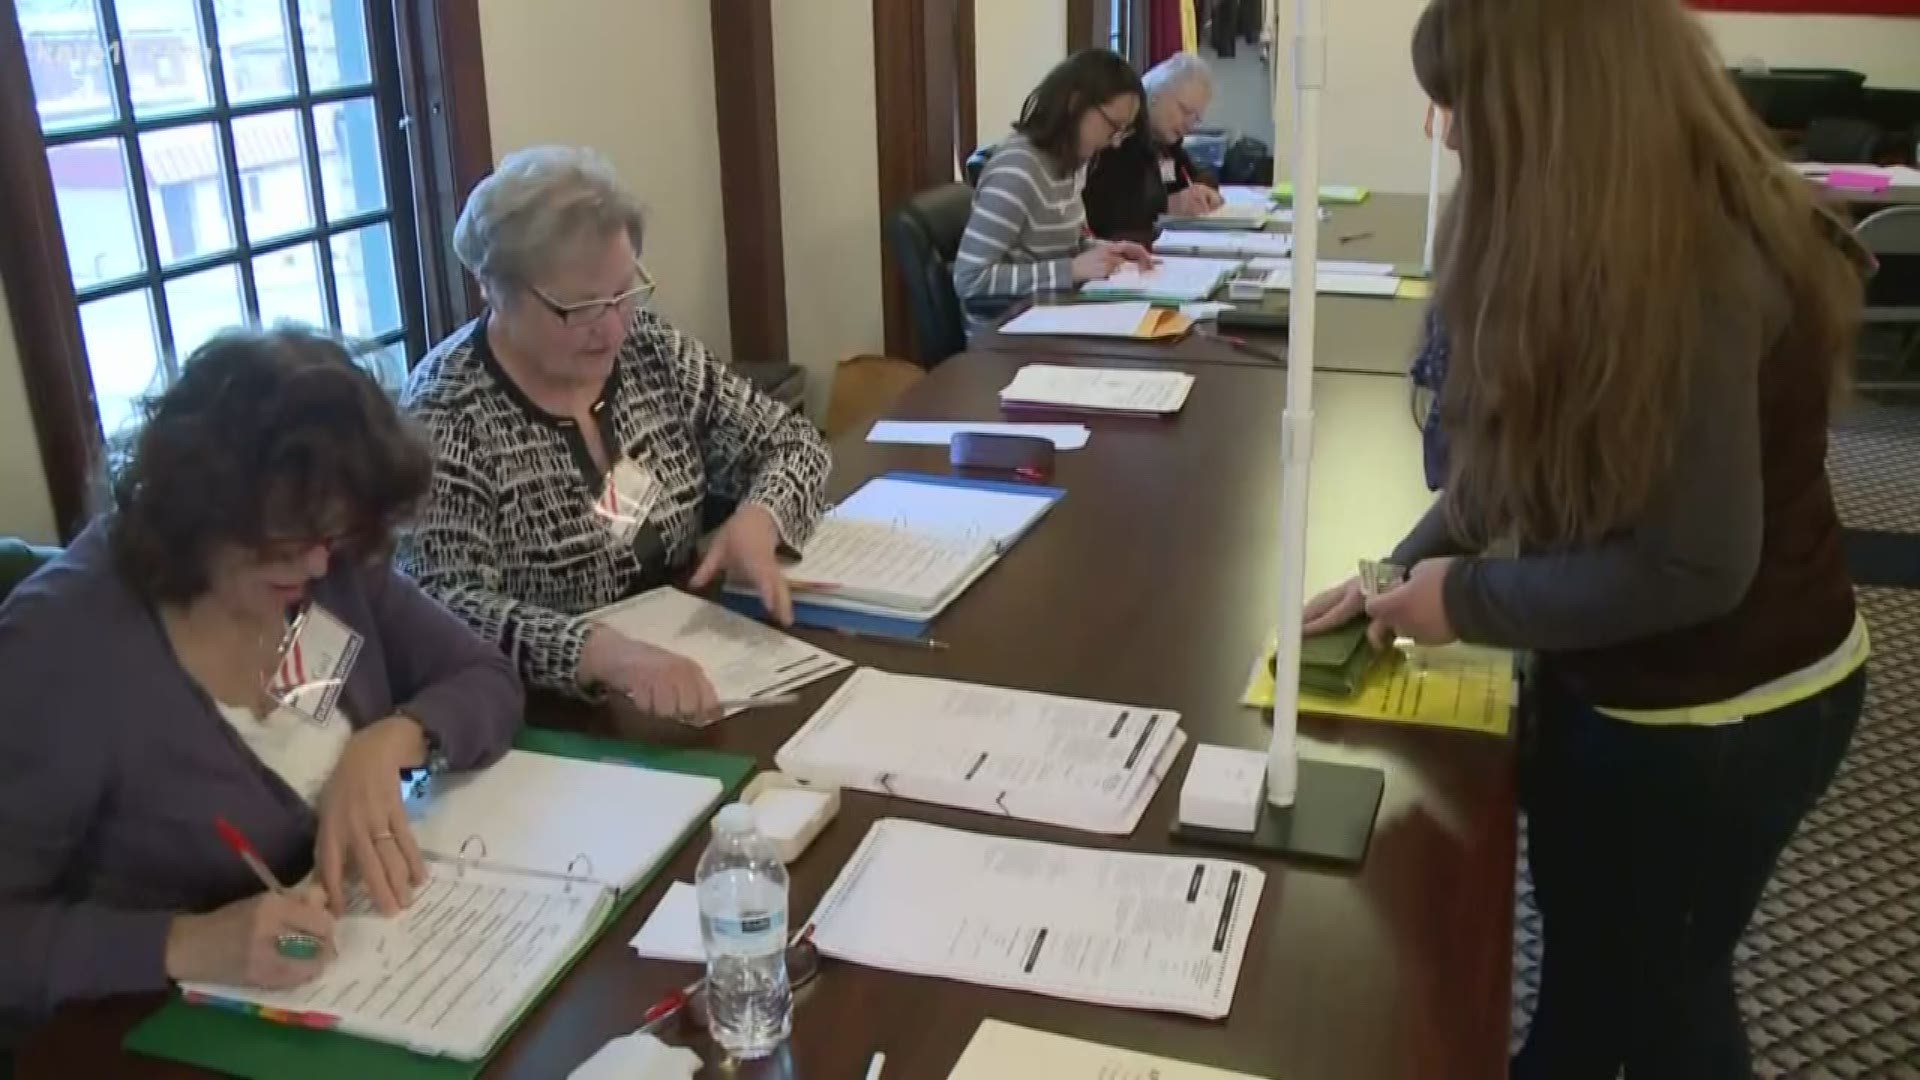 The Minnesota Senate has made voter photo ID a priority for the 2020 legislative session.